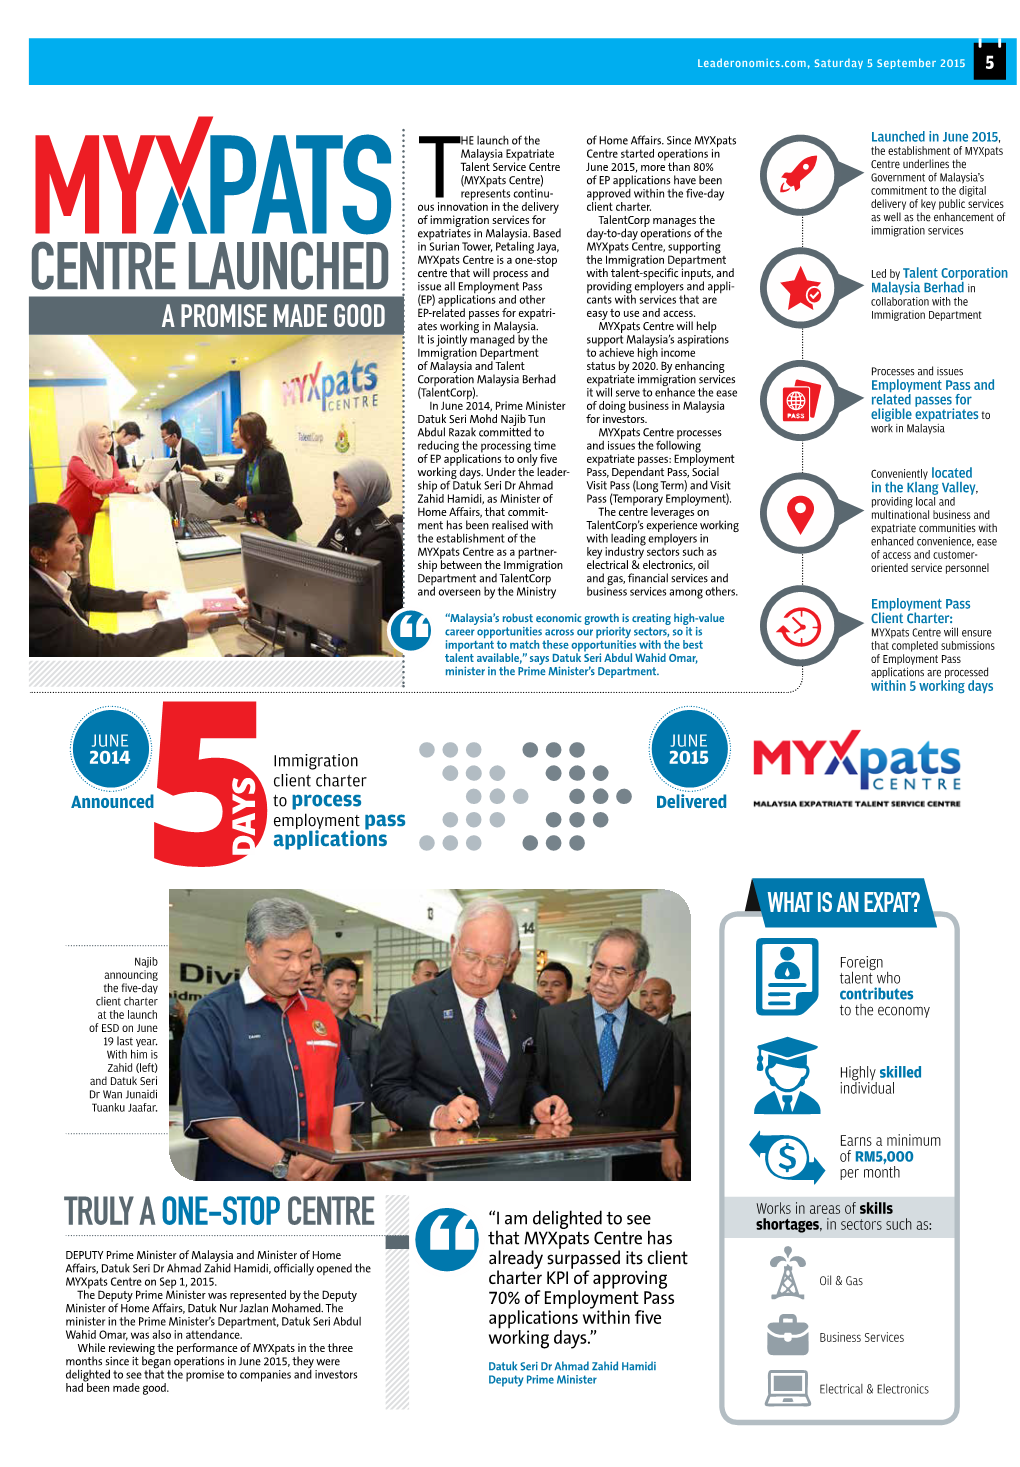 Myxpats Centre Launched